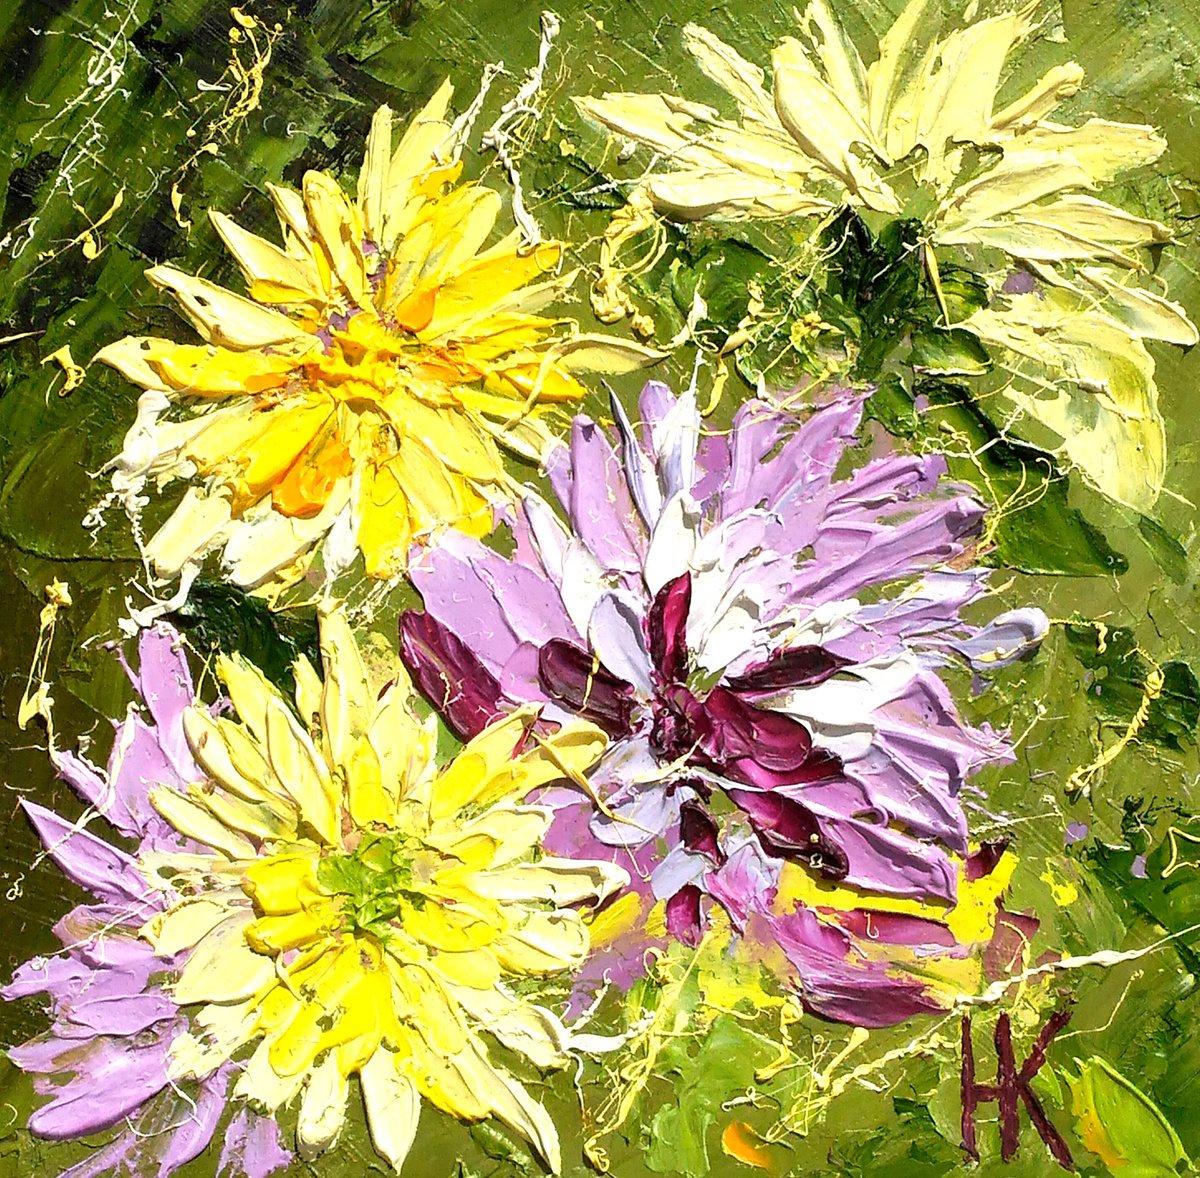 Chrysanthemum Painting Floral Original Art Flower Small Oil Impasto Pallete Knife Artwork... by Halyna Kirichenko